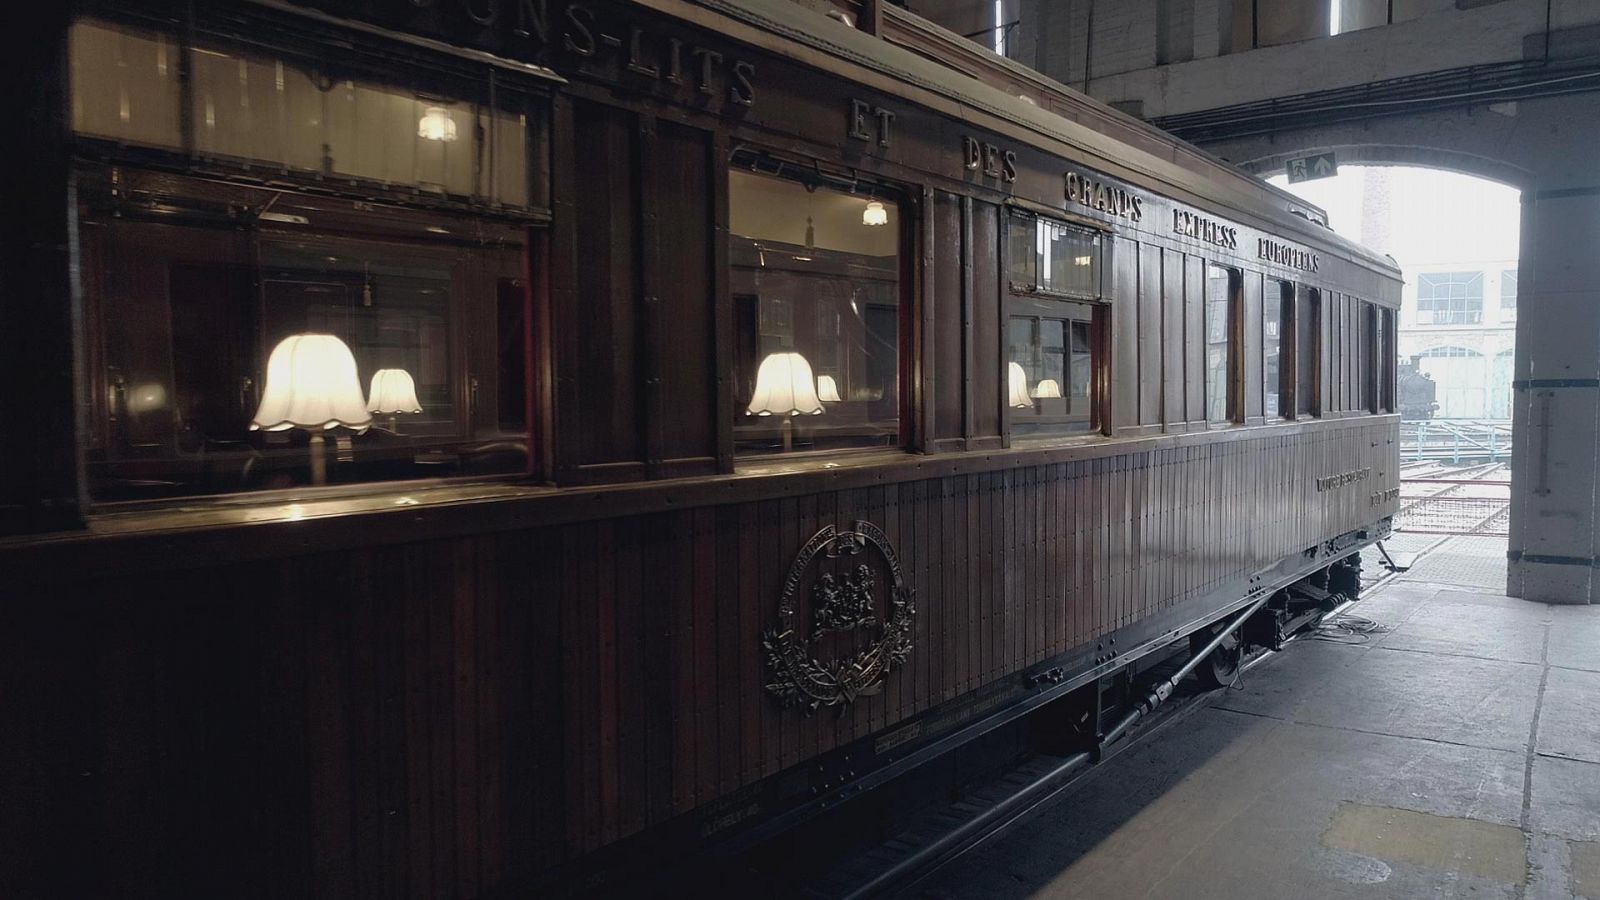 En busca del Orient Express - Episodio 2 - Documental en RTVE